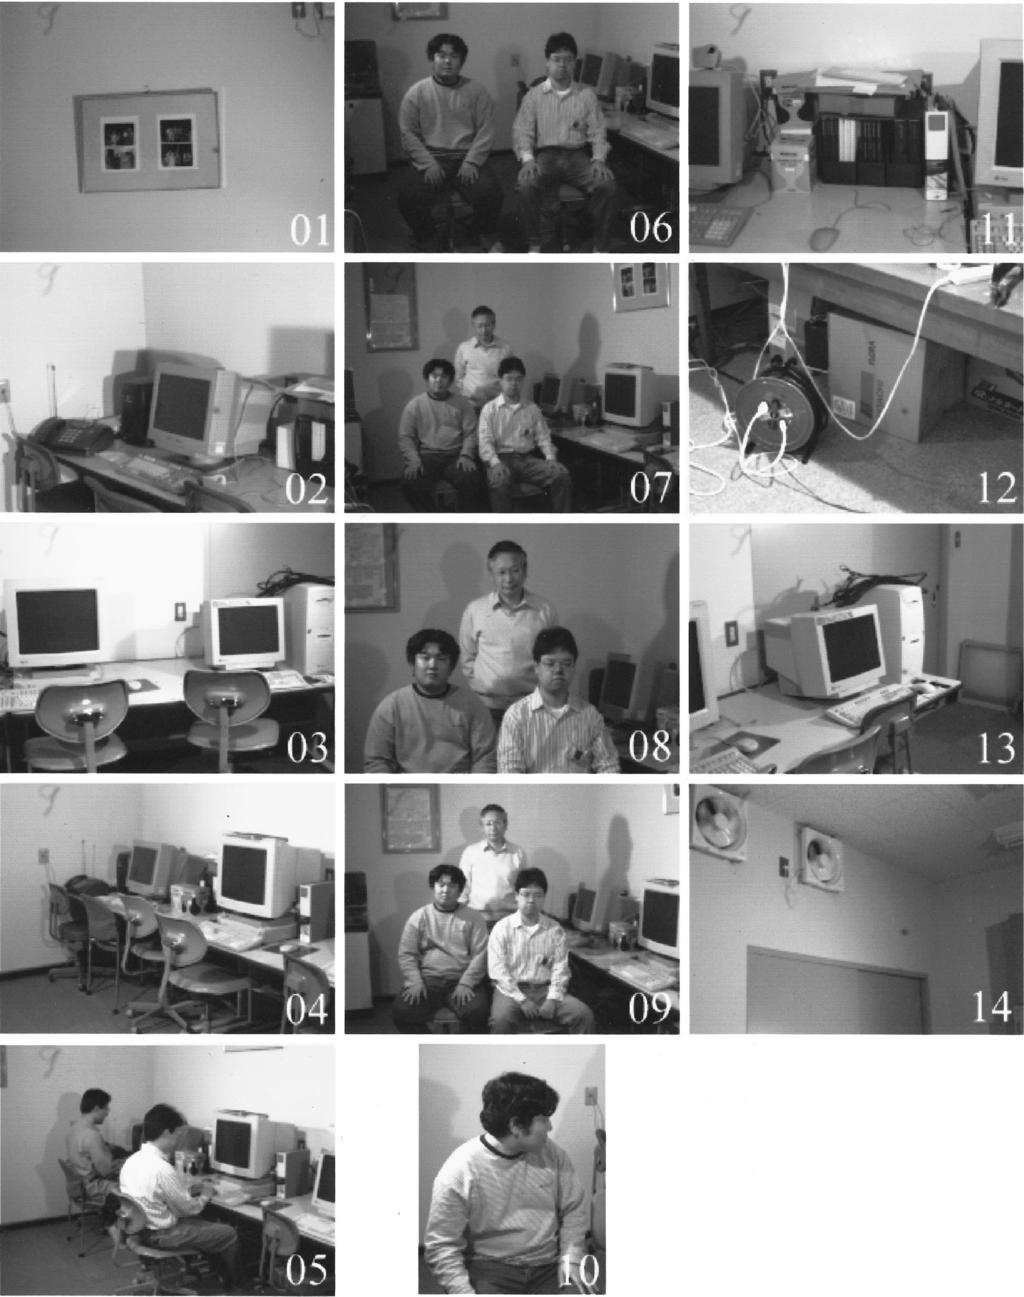 Tominaga et al. Vol. 18, No. 1/January 2001/J. Opt. Soc. Am. A 59 Fig. 8. Set of 14 images of indoor scenes under an incandescent lamp.